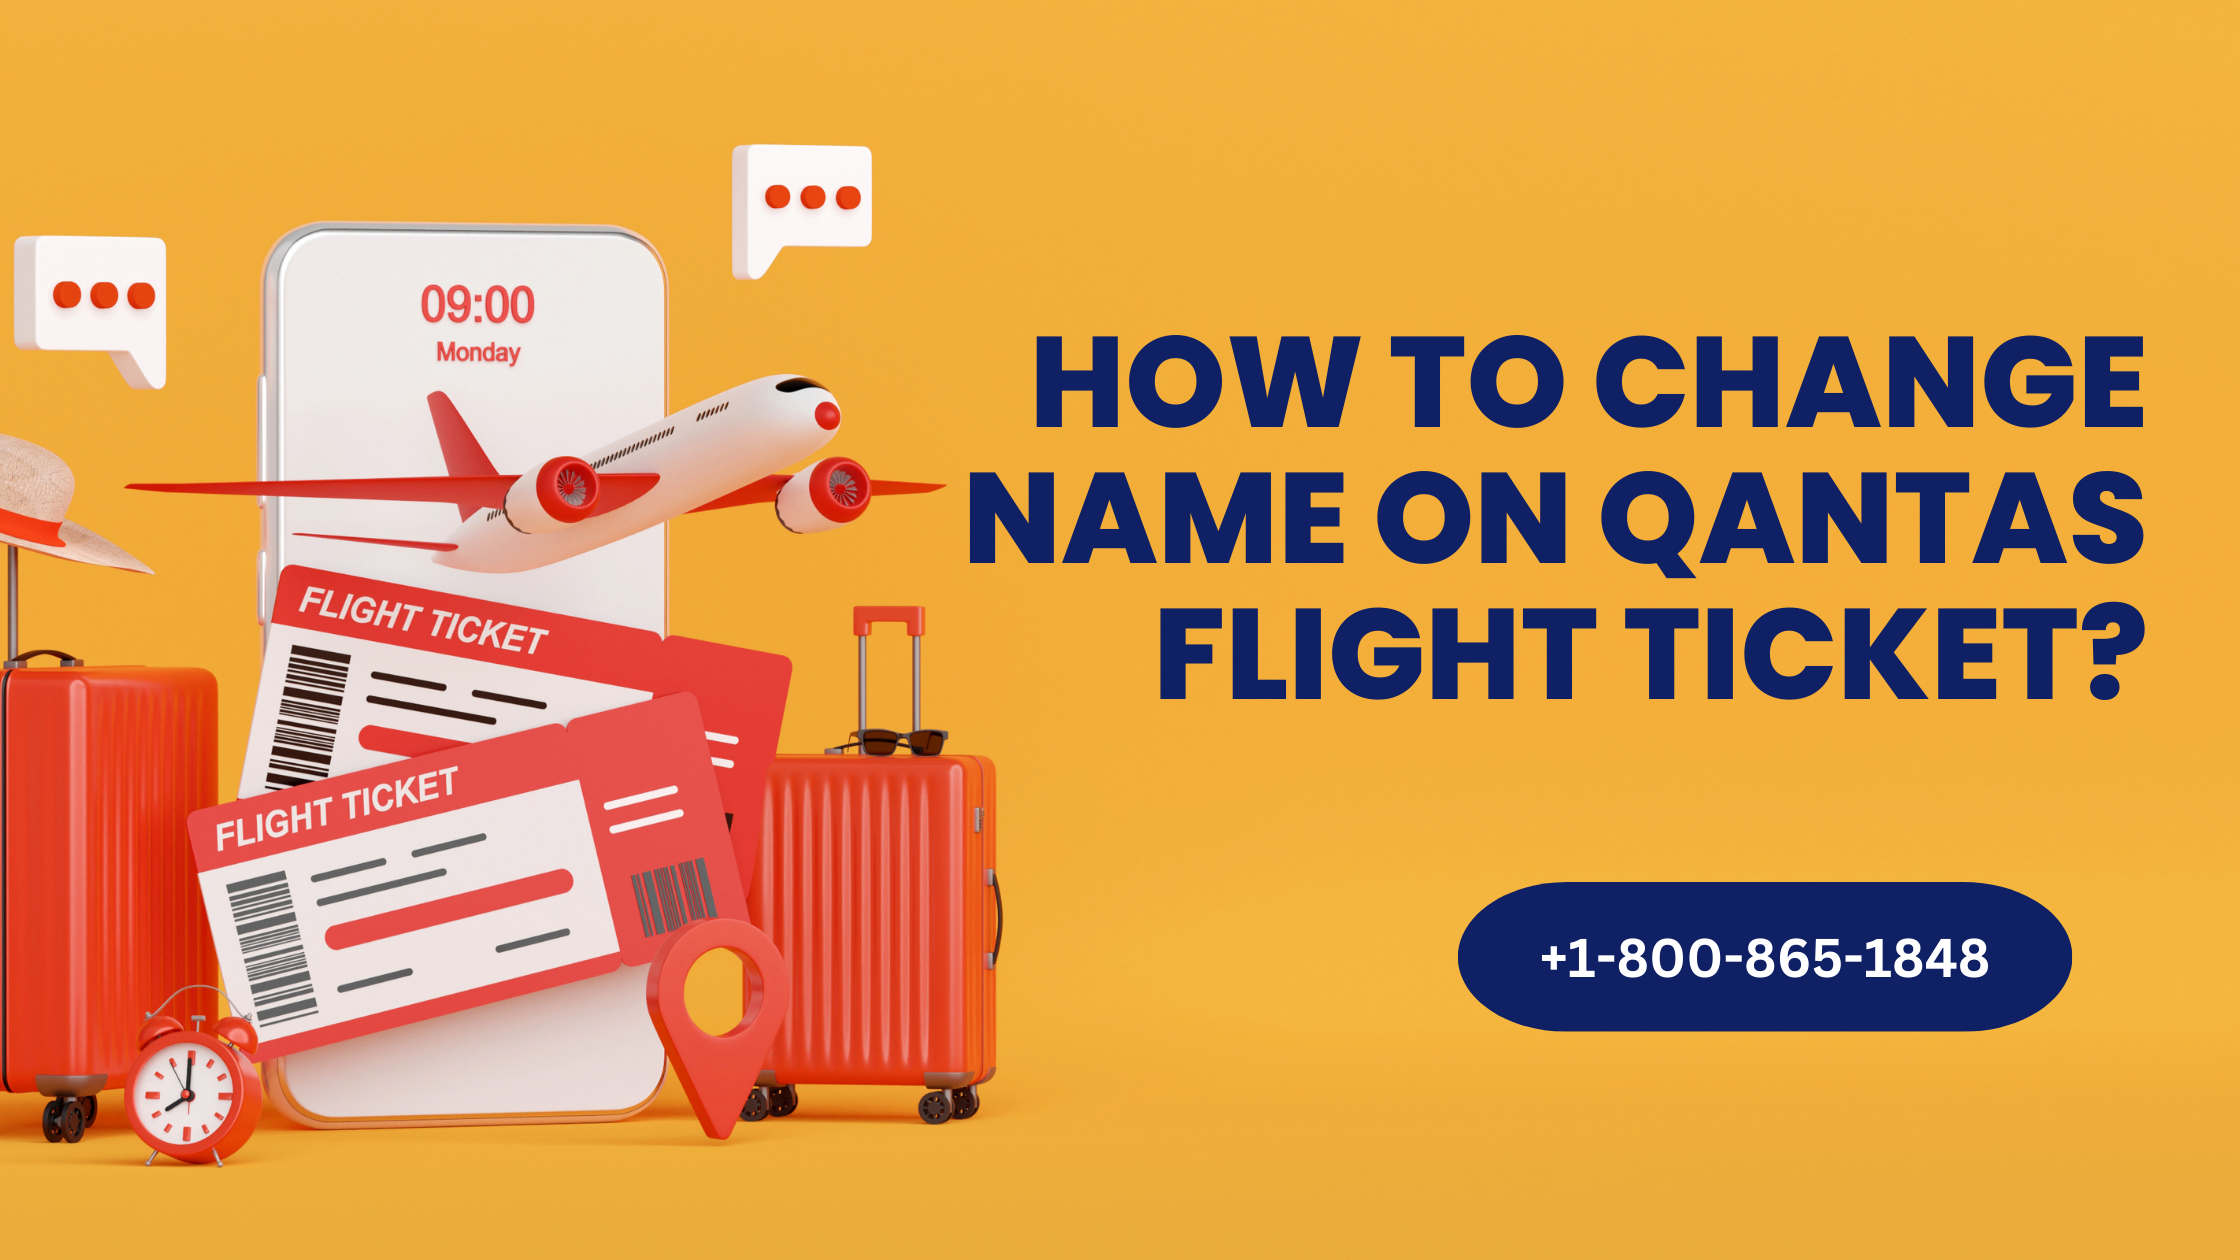 How To Change Name on Qantas Flight Ticket?